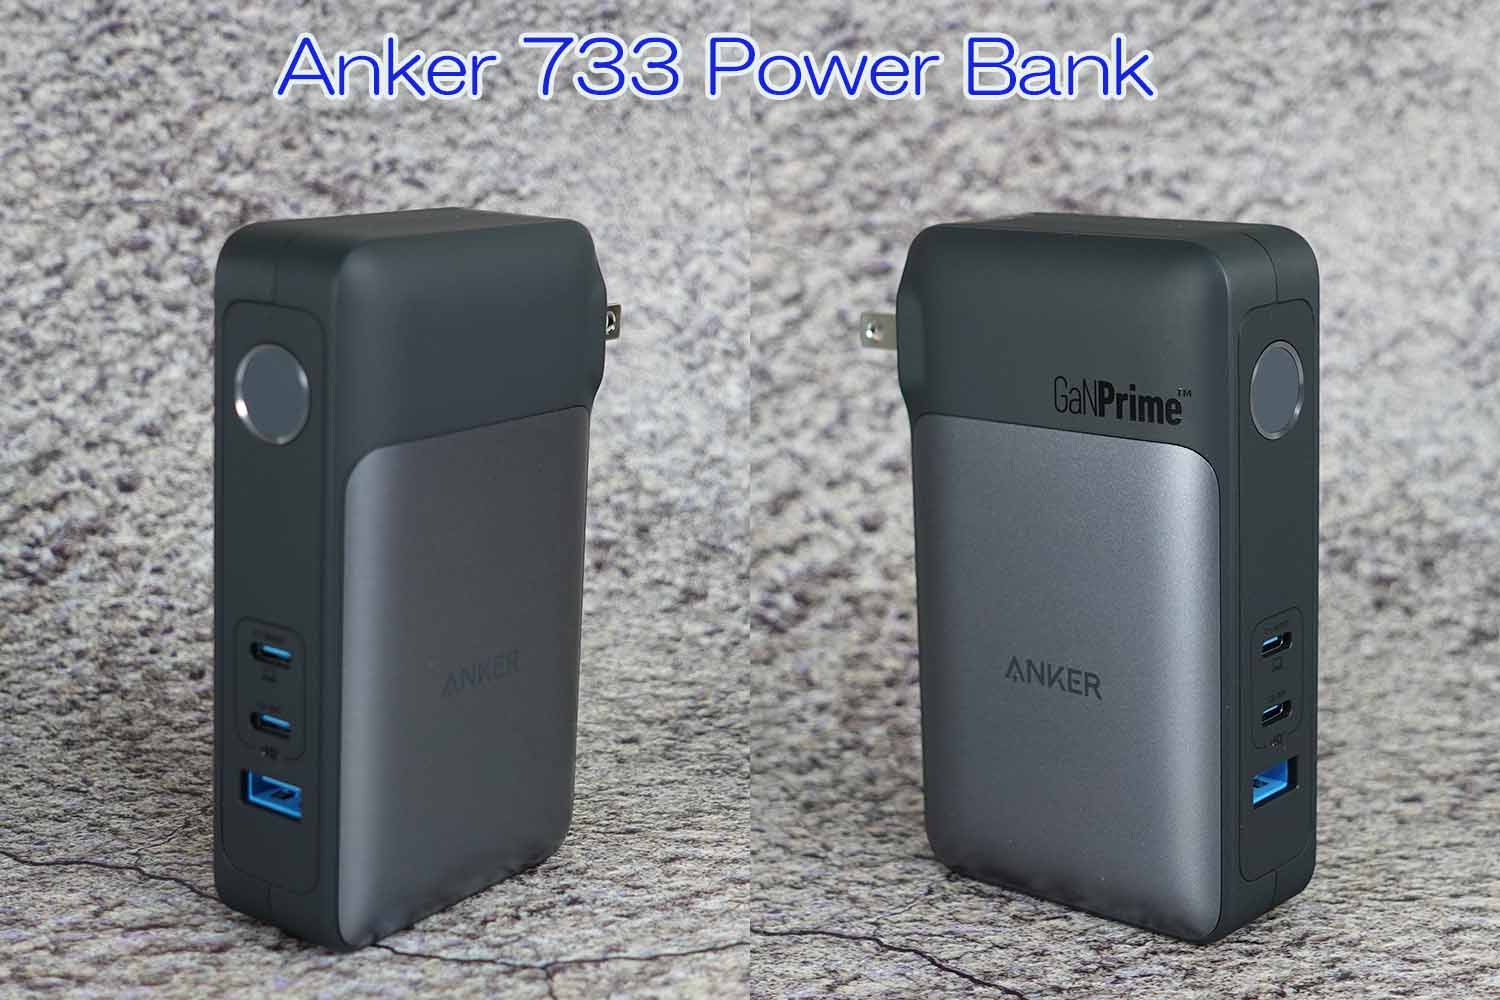 Anker 733 Power Bank ブラック www.krzysztofbialy.com